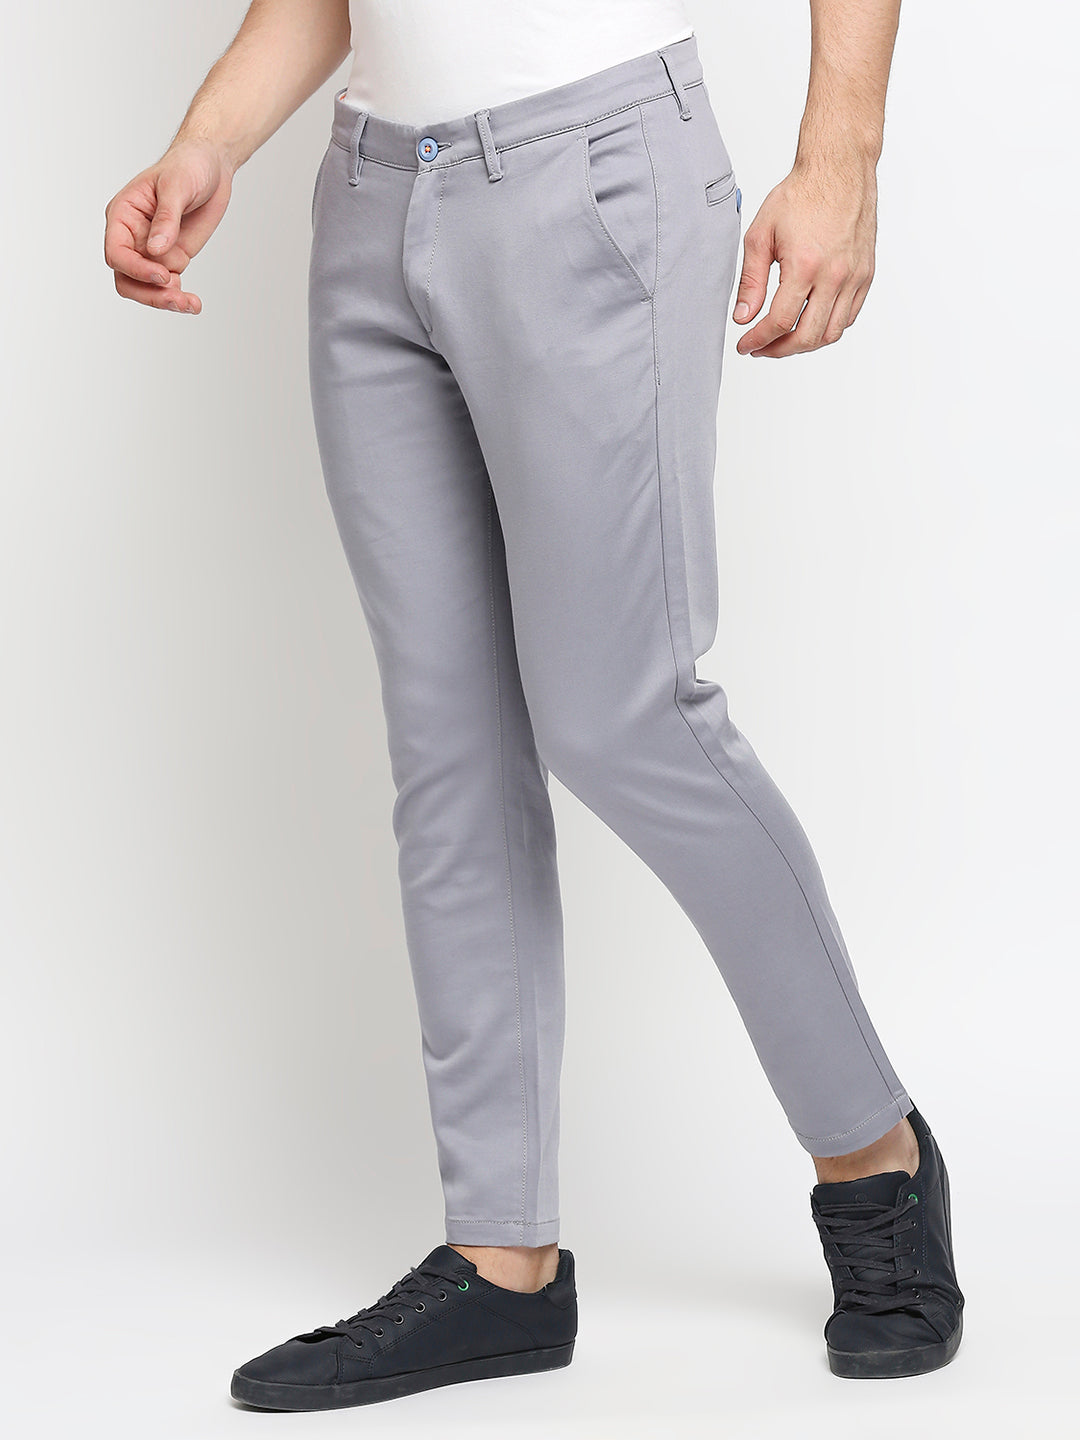 Style Hook Polyster Blend Formal Trousers For Man regular fit formal pants  light grey colour